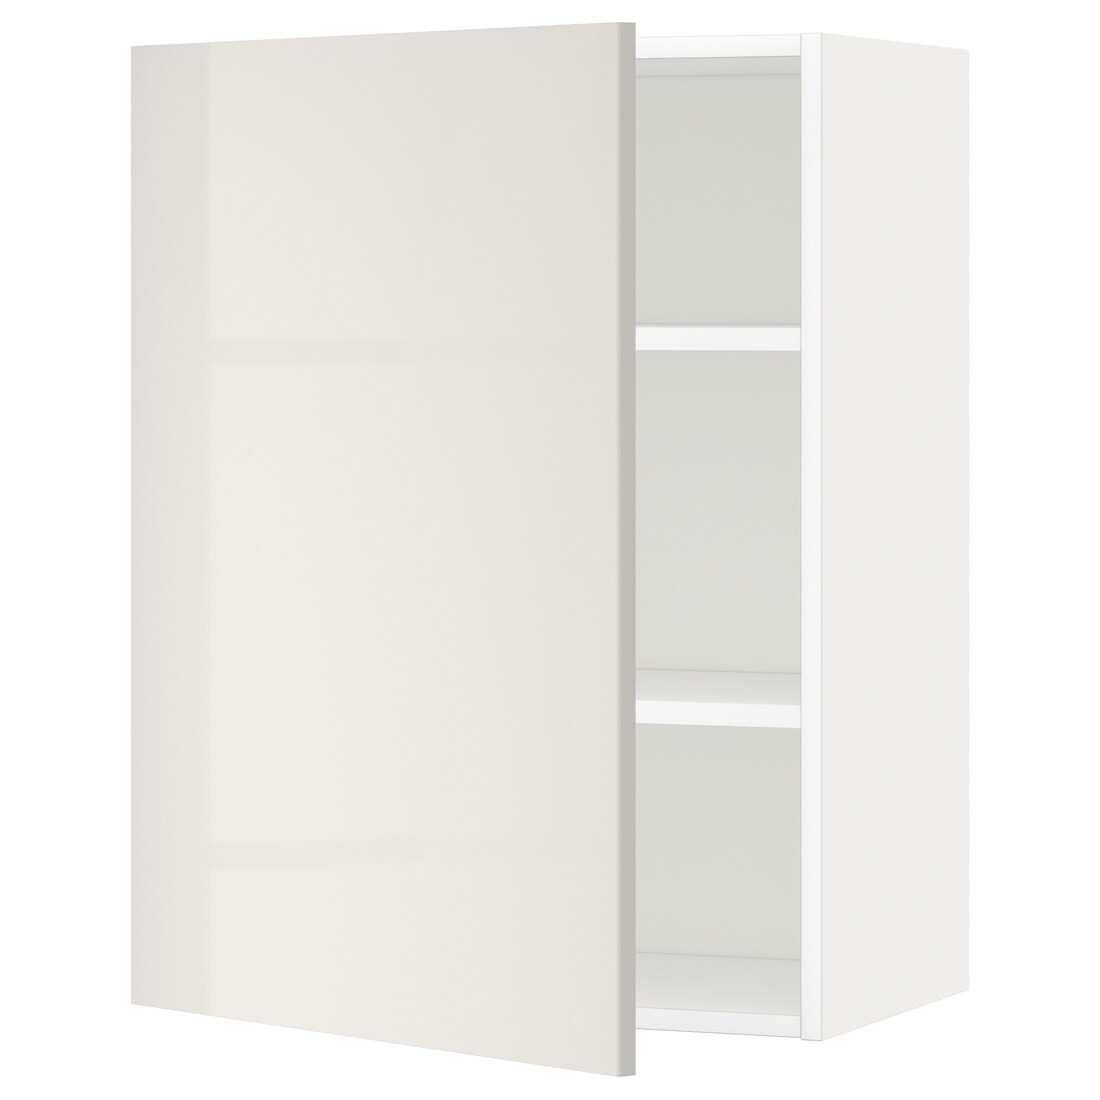 IKEA METOD МЕТОД Шкаф навесной с полками, белый / Ringhult светло-серый, 60x80 см 49458257 494.582.57